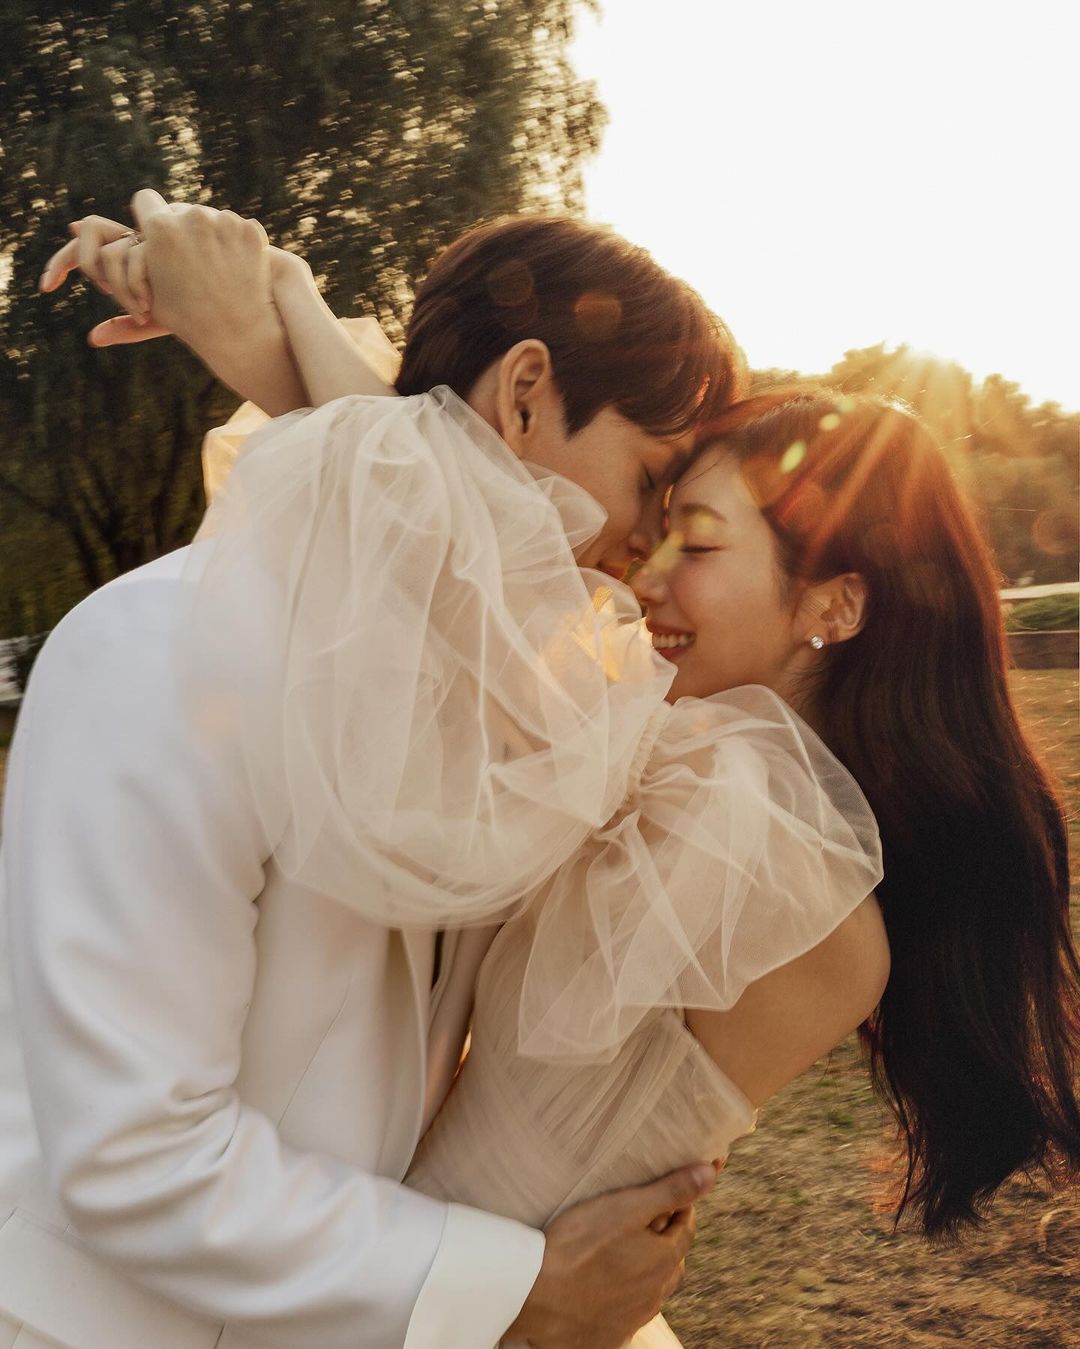 Chae Seo Jin Shares Beautiful Wedding Photos